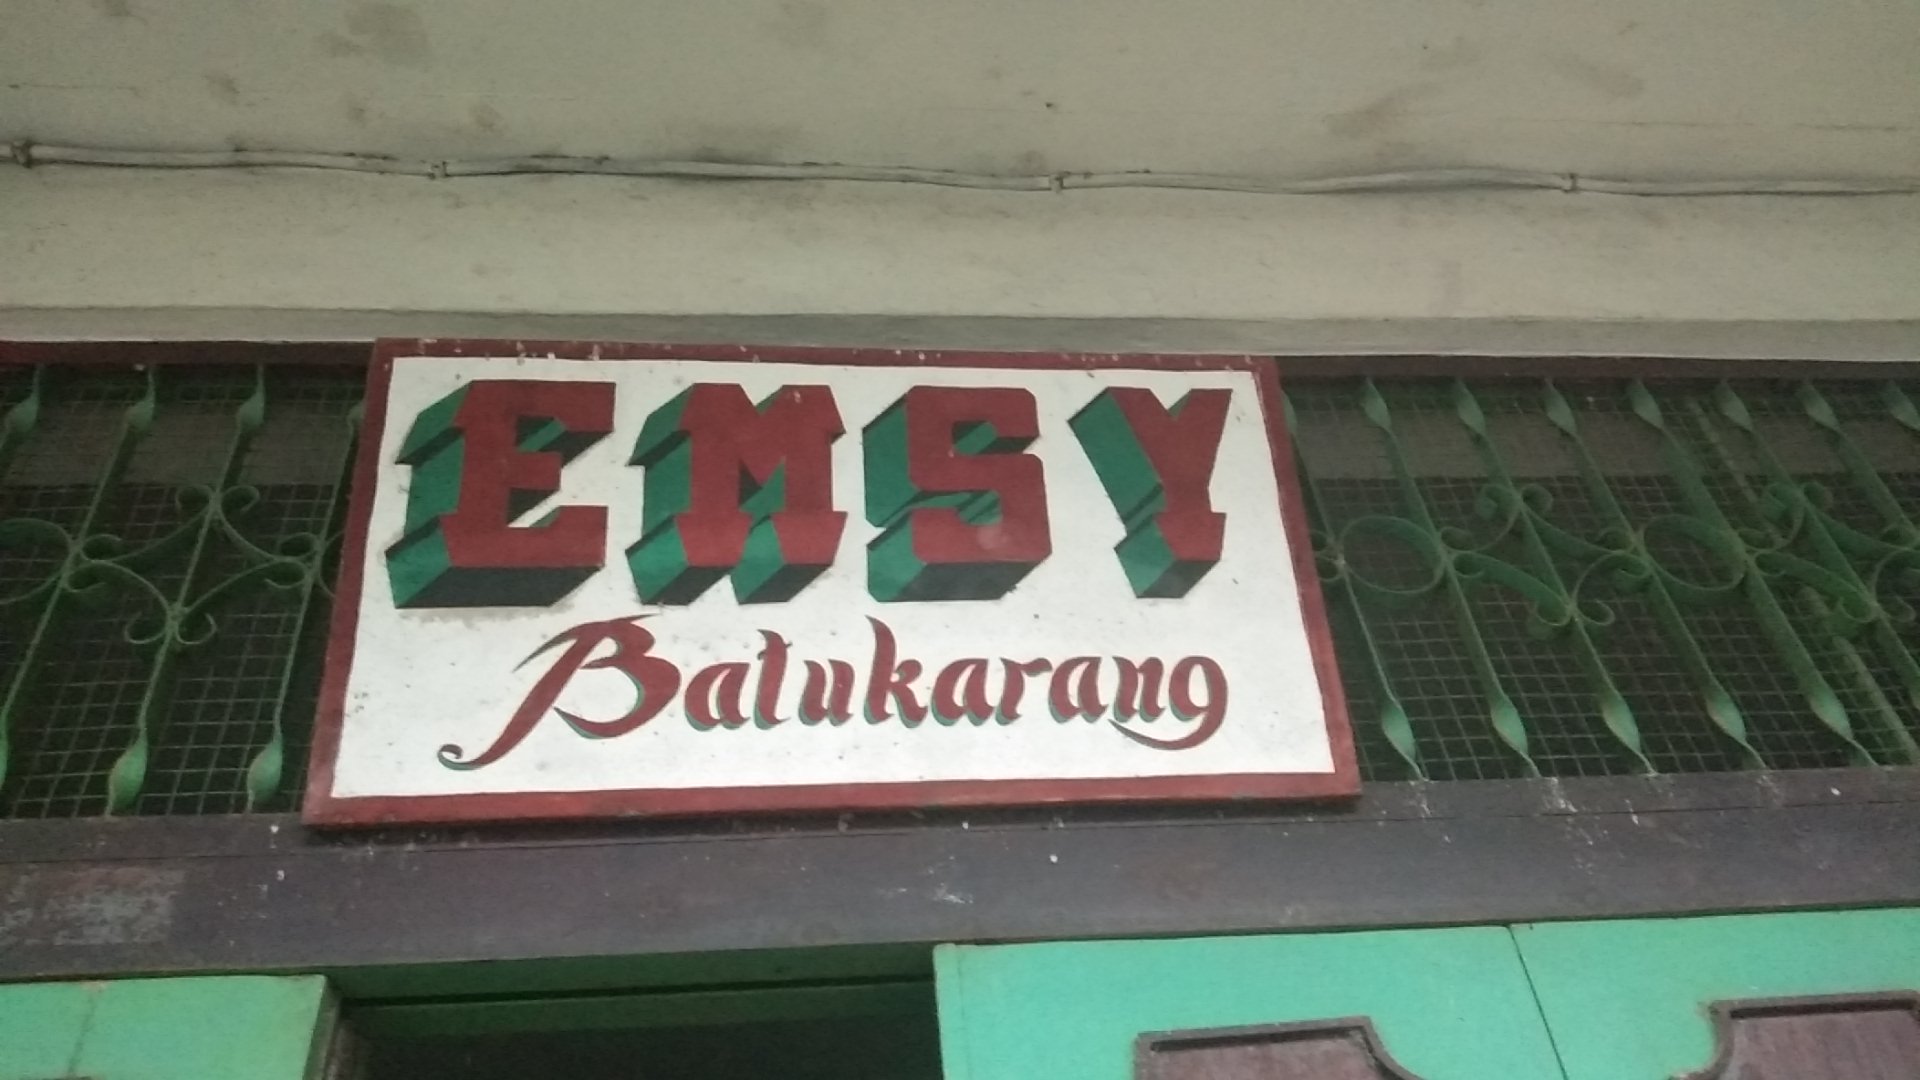 Emsy Ent. Batukarang Photo